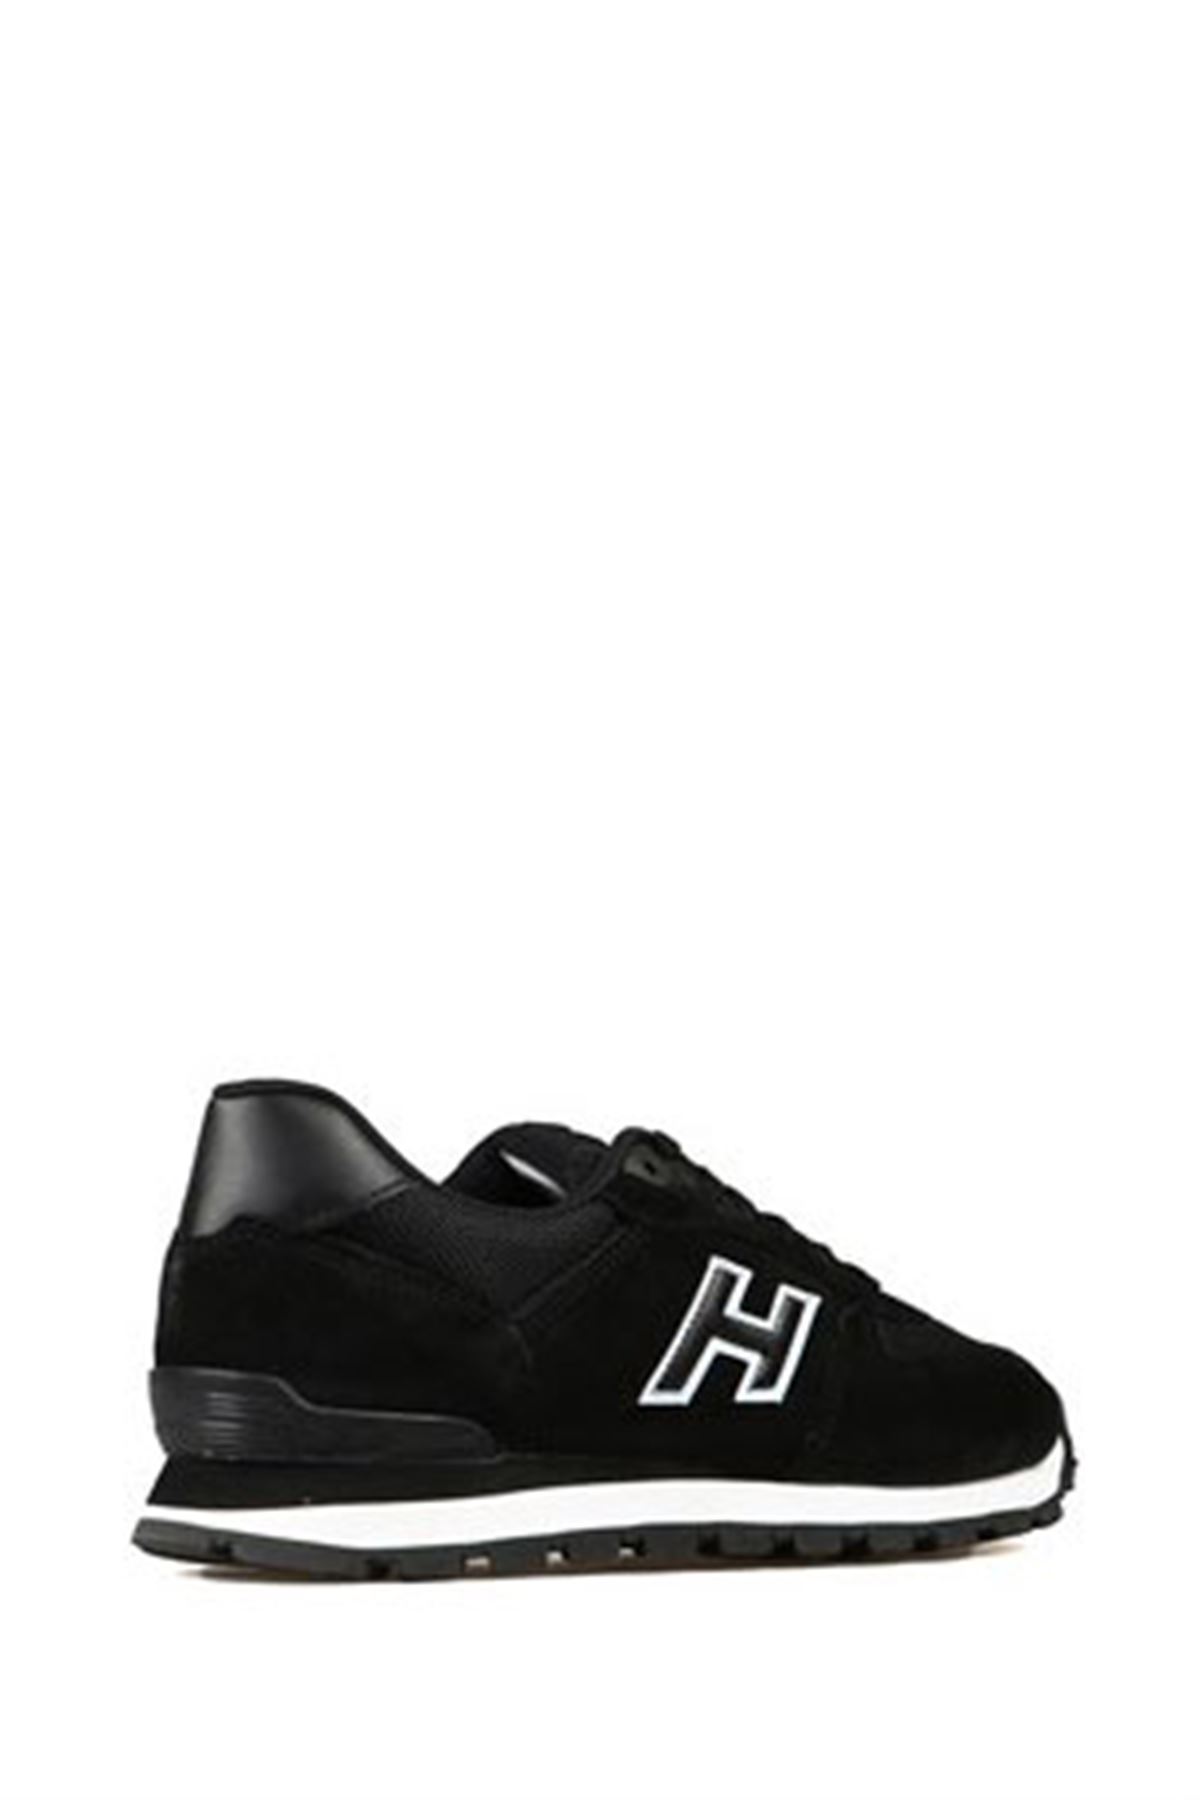 Hammer Jack Peru Erkek Spor Ayakkabı - Siyah